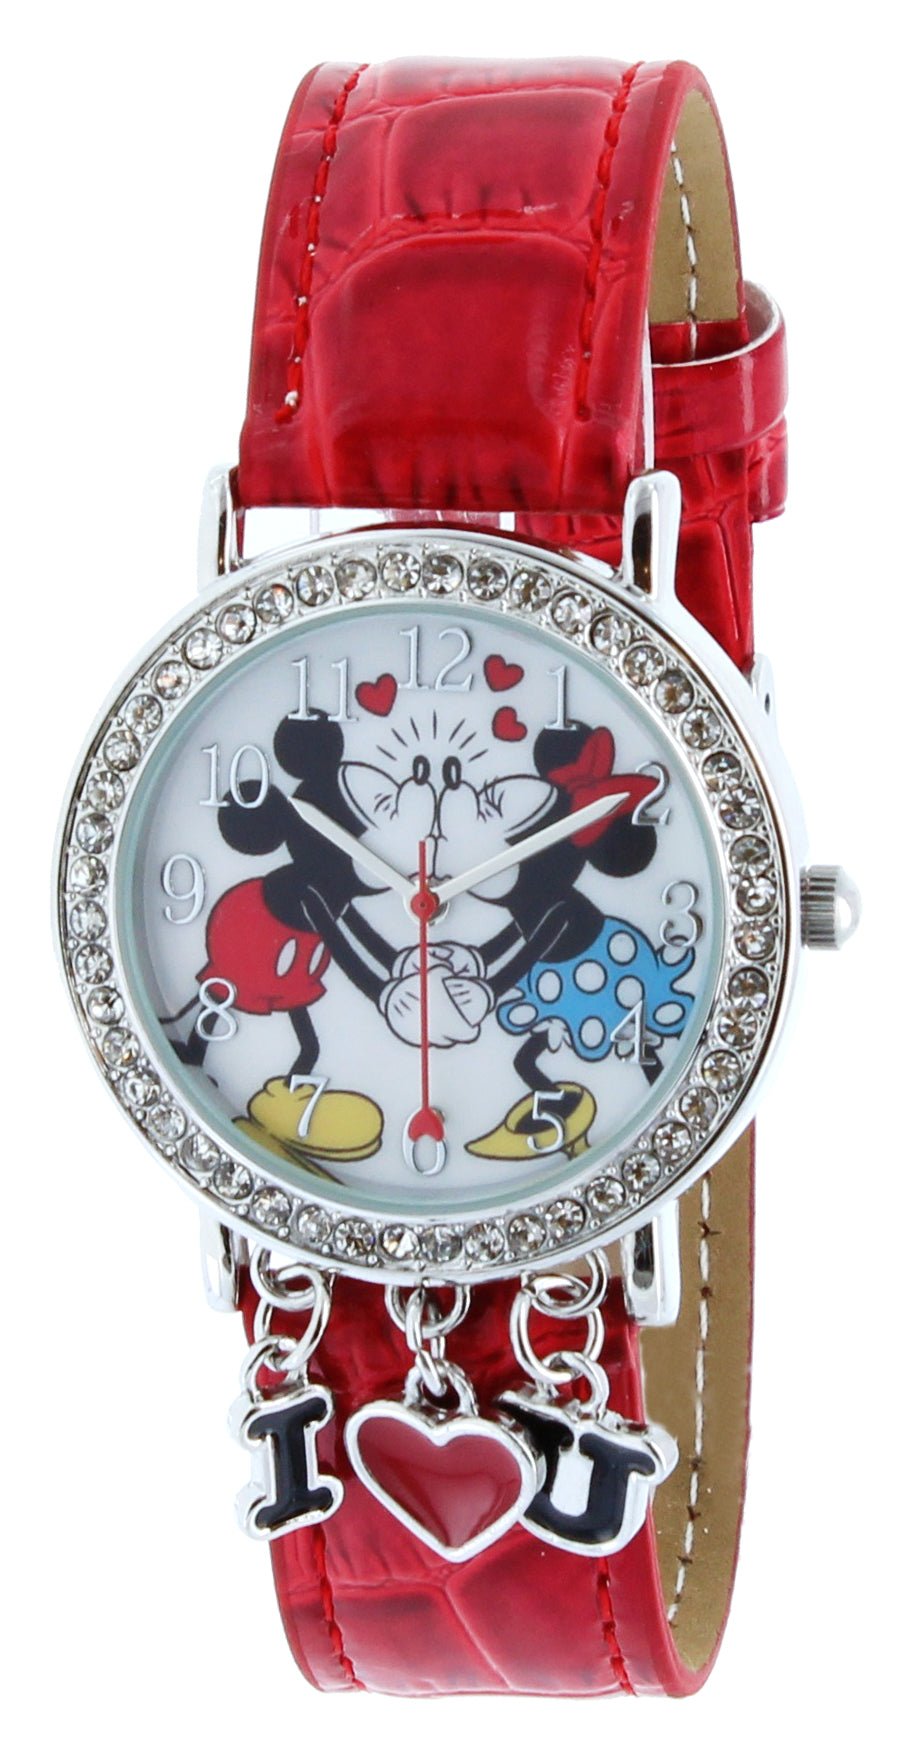 Model: Disney Mickey & Minnie Watch - Holding Hand & Kissing